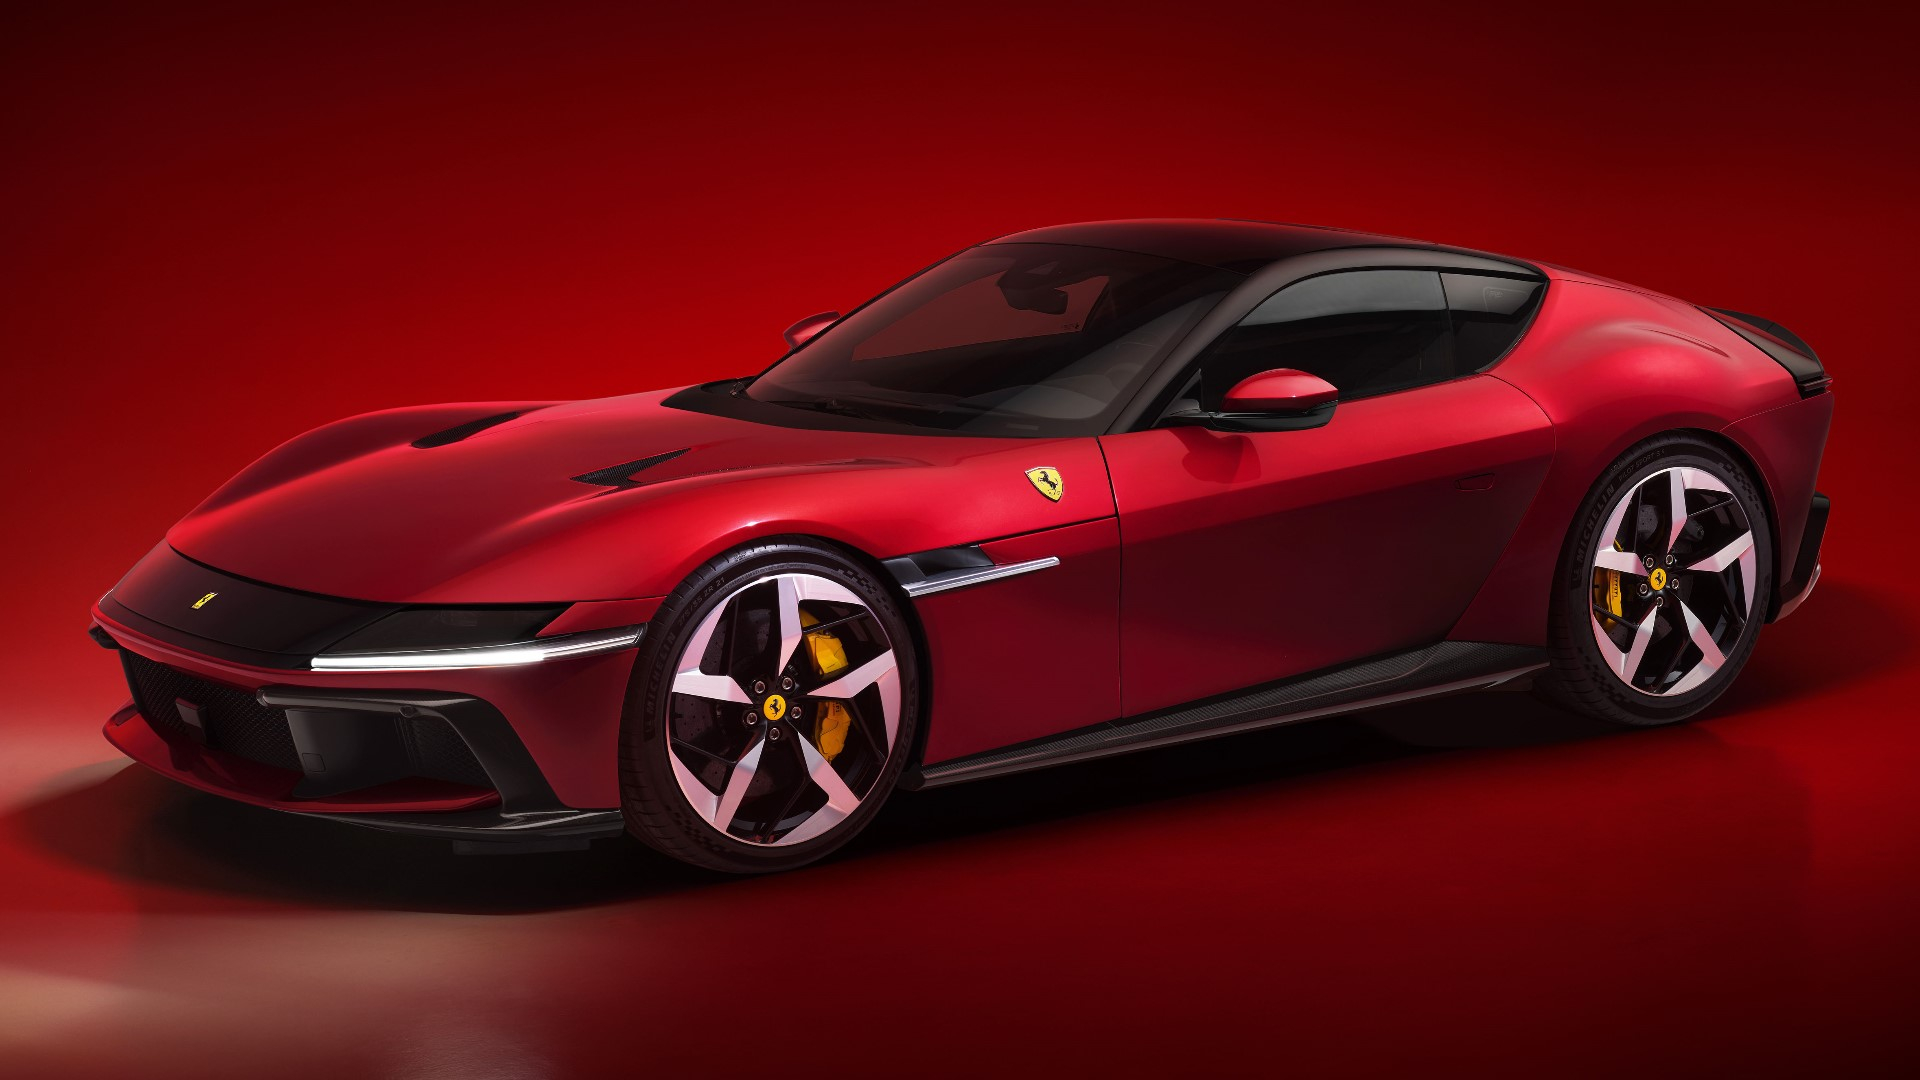 The new 830-horsepower Ferrari 12Cilindri was introduced